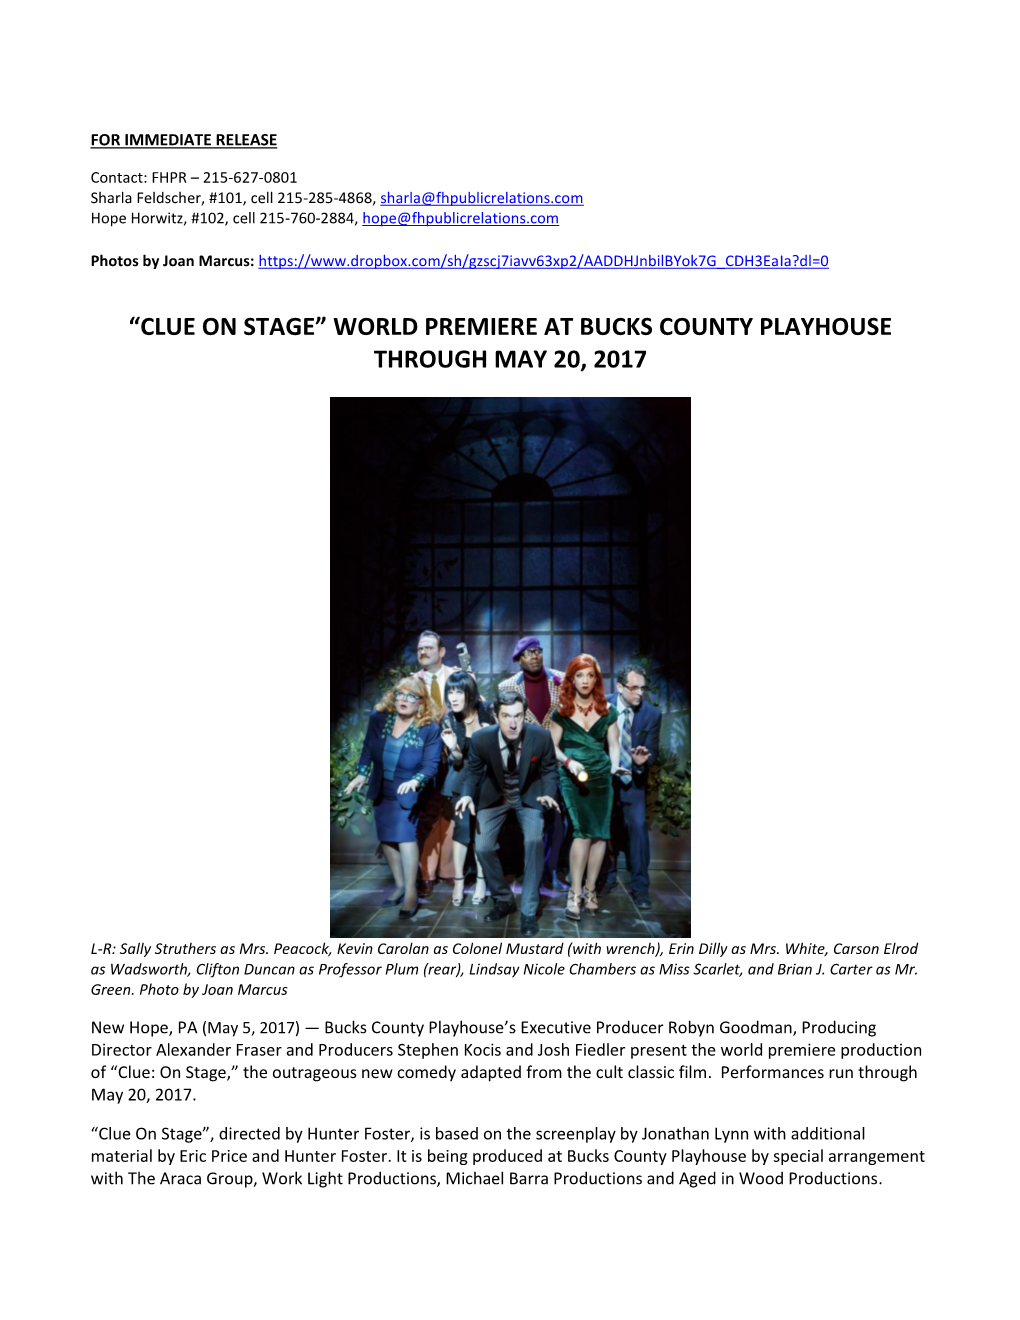 World Premiere at Bucks County Playhouse Through May 20, 2017